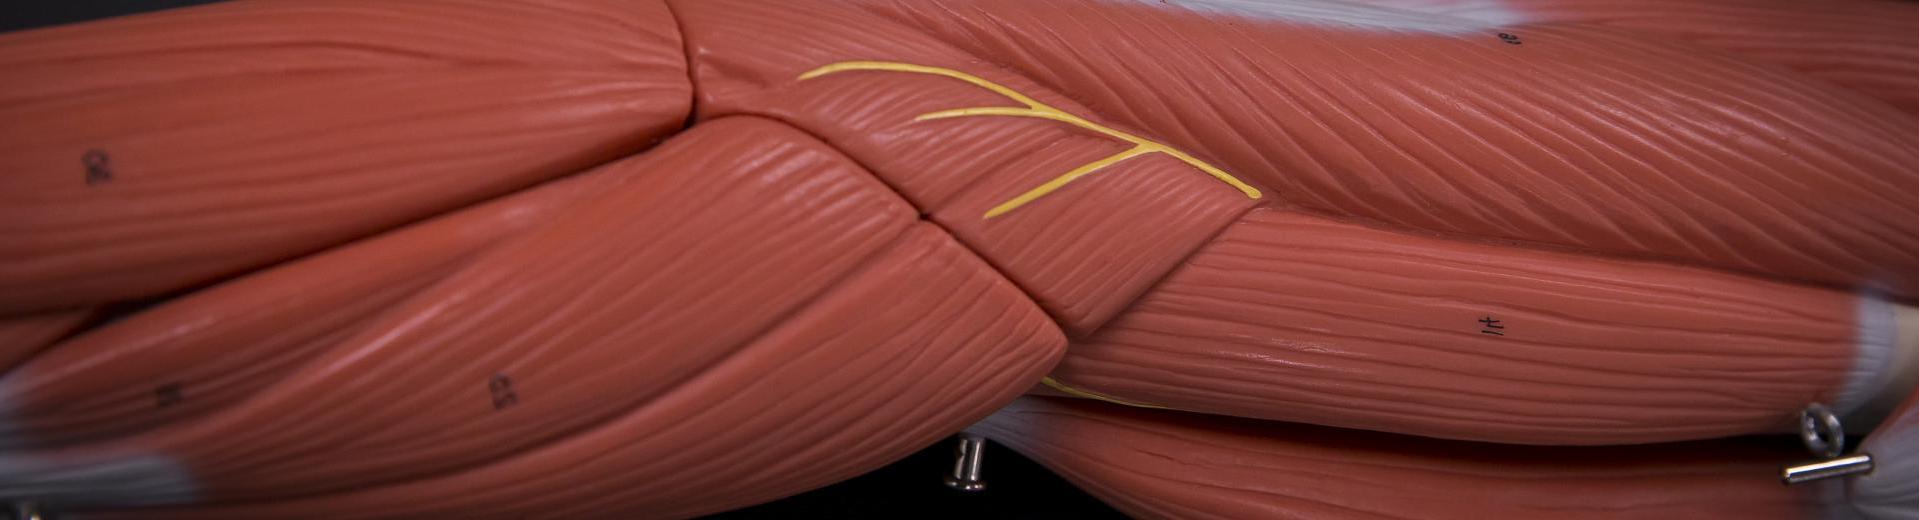 muscle fibers in an arm